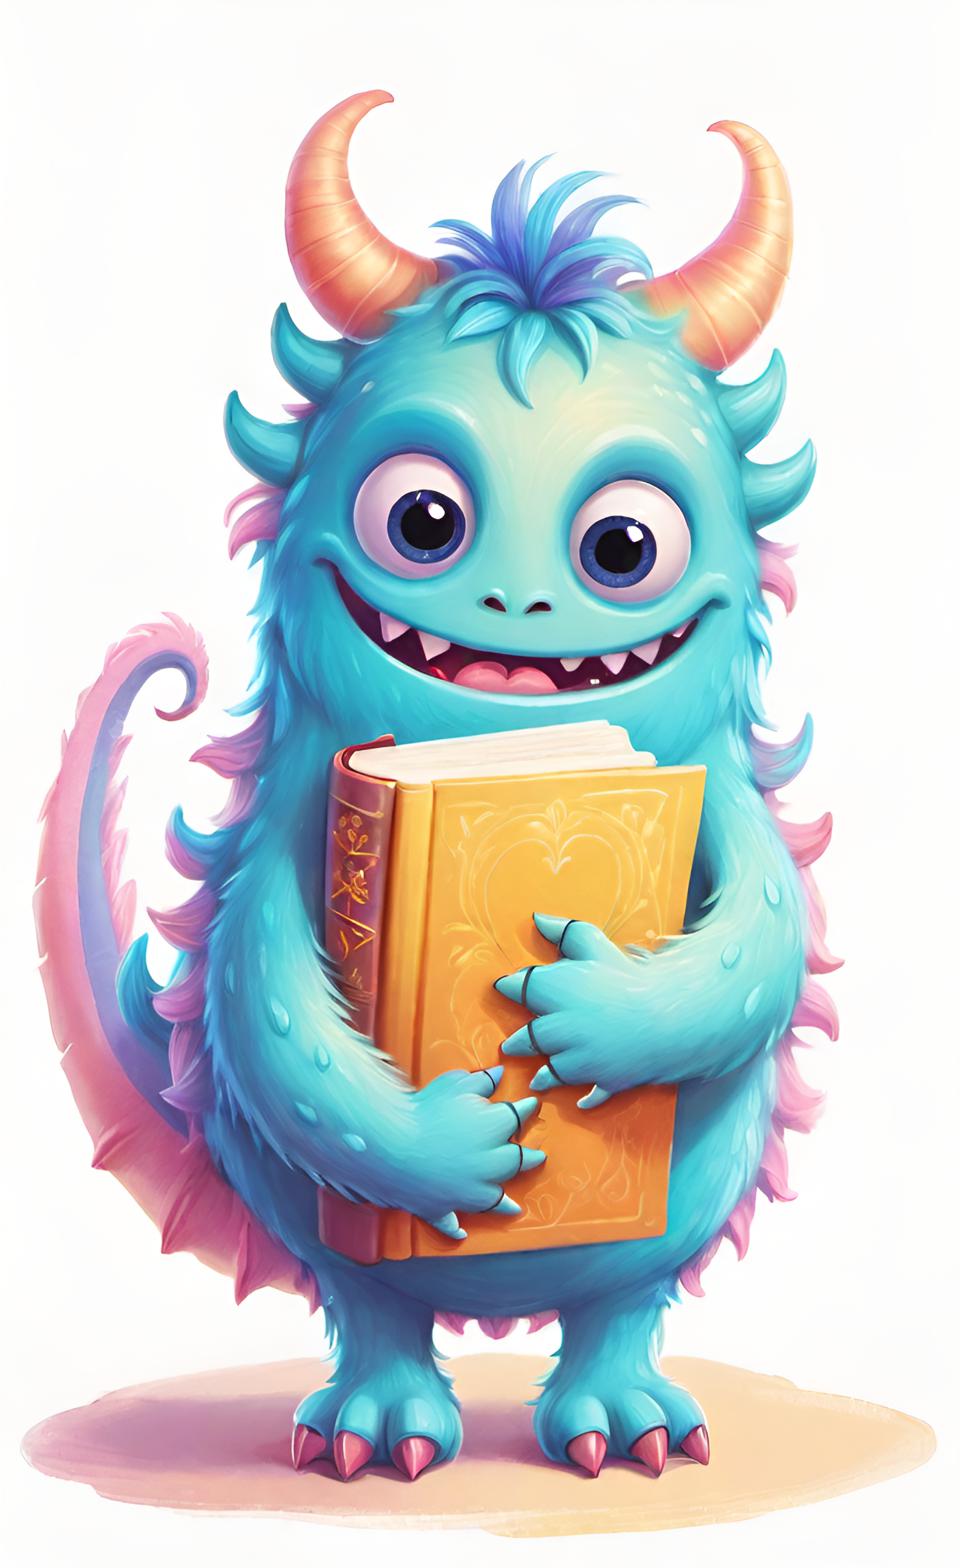 Cute blue monster hugging a book